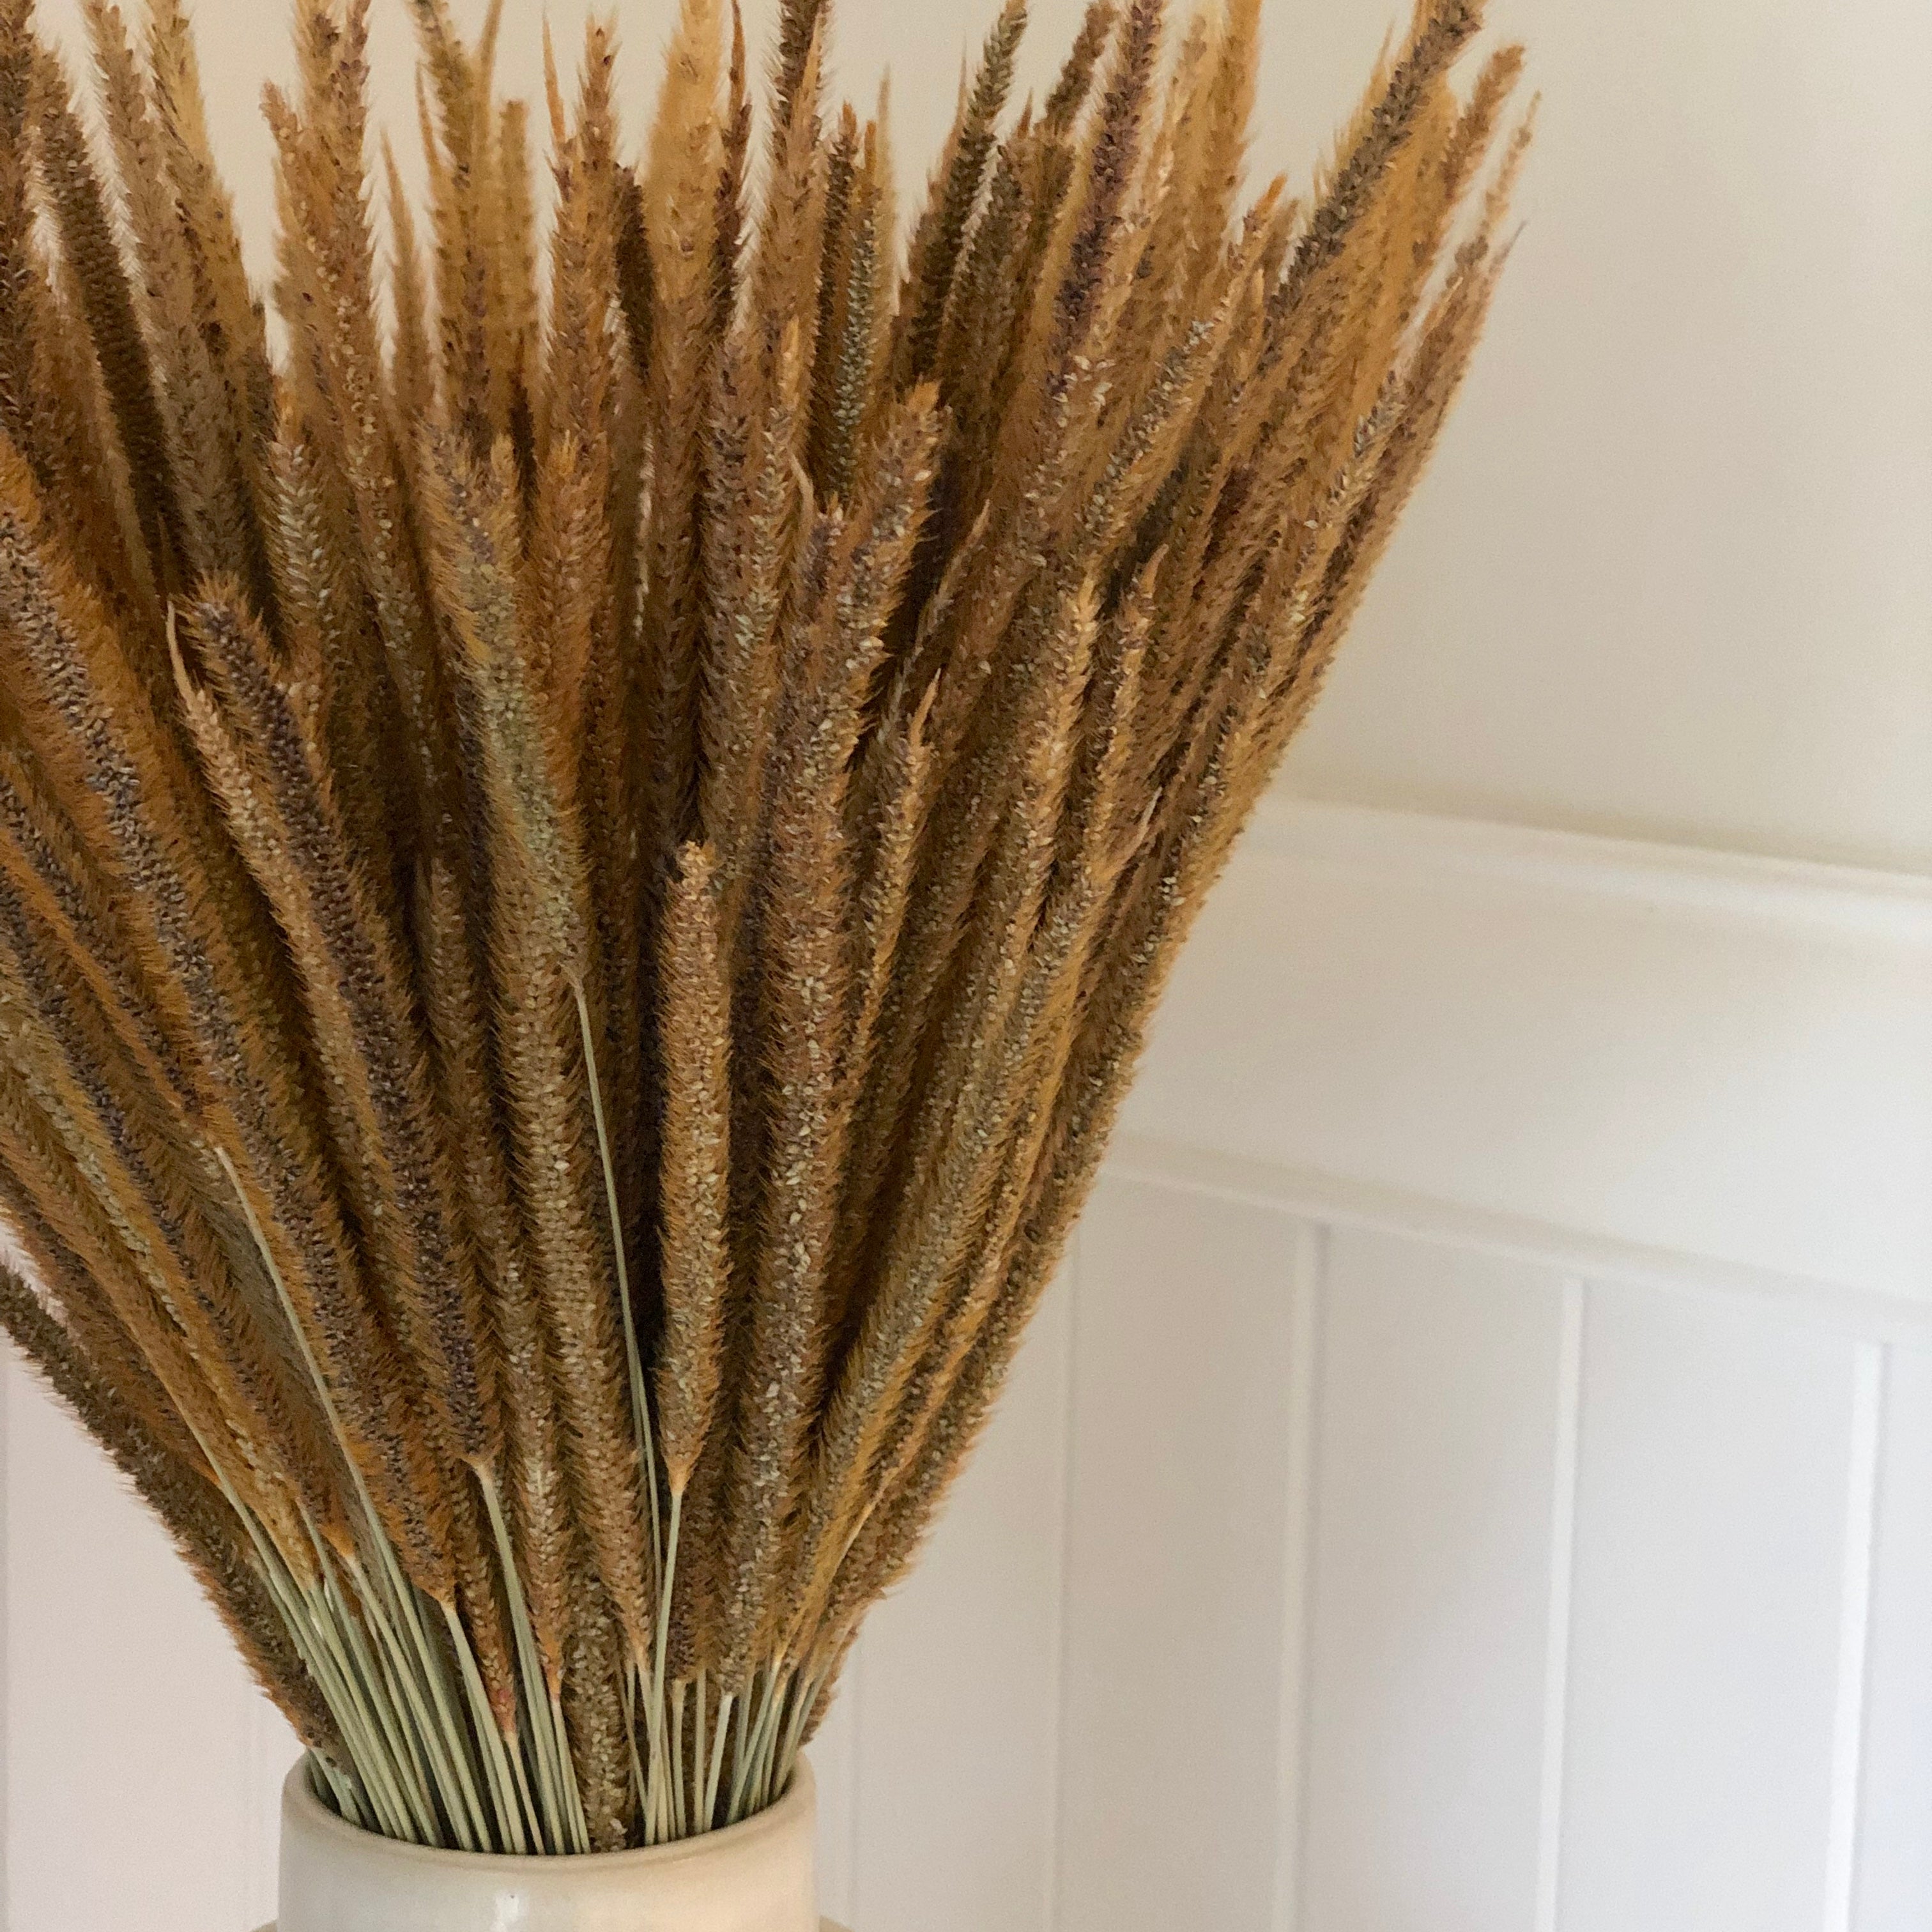 Dried Kirin Grass Stems x 50 pcs - Natural ((BULK PACK))